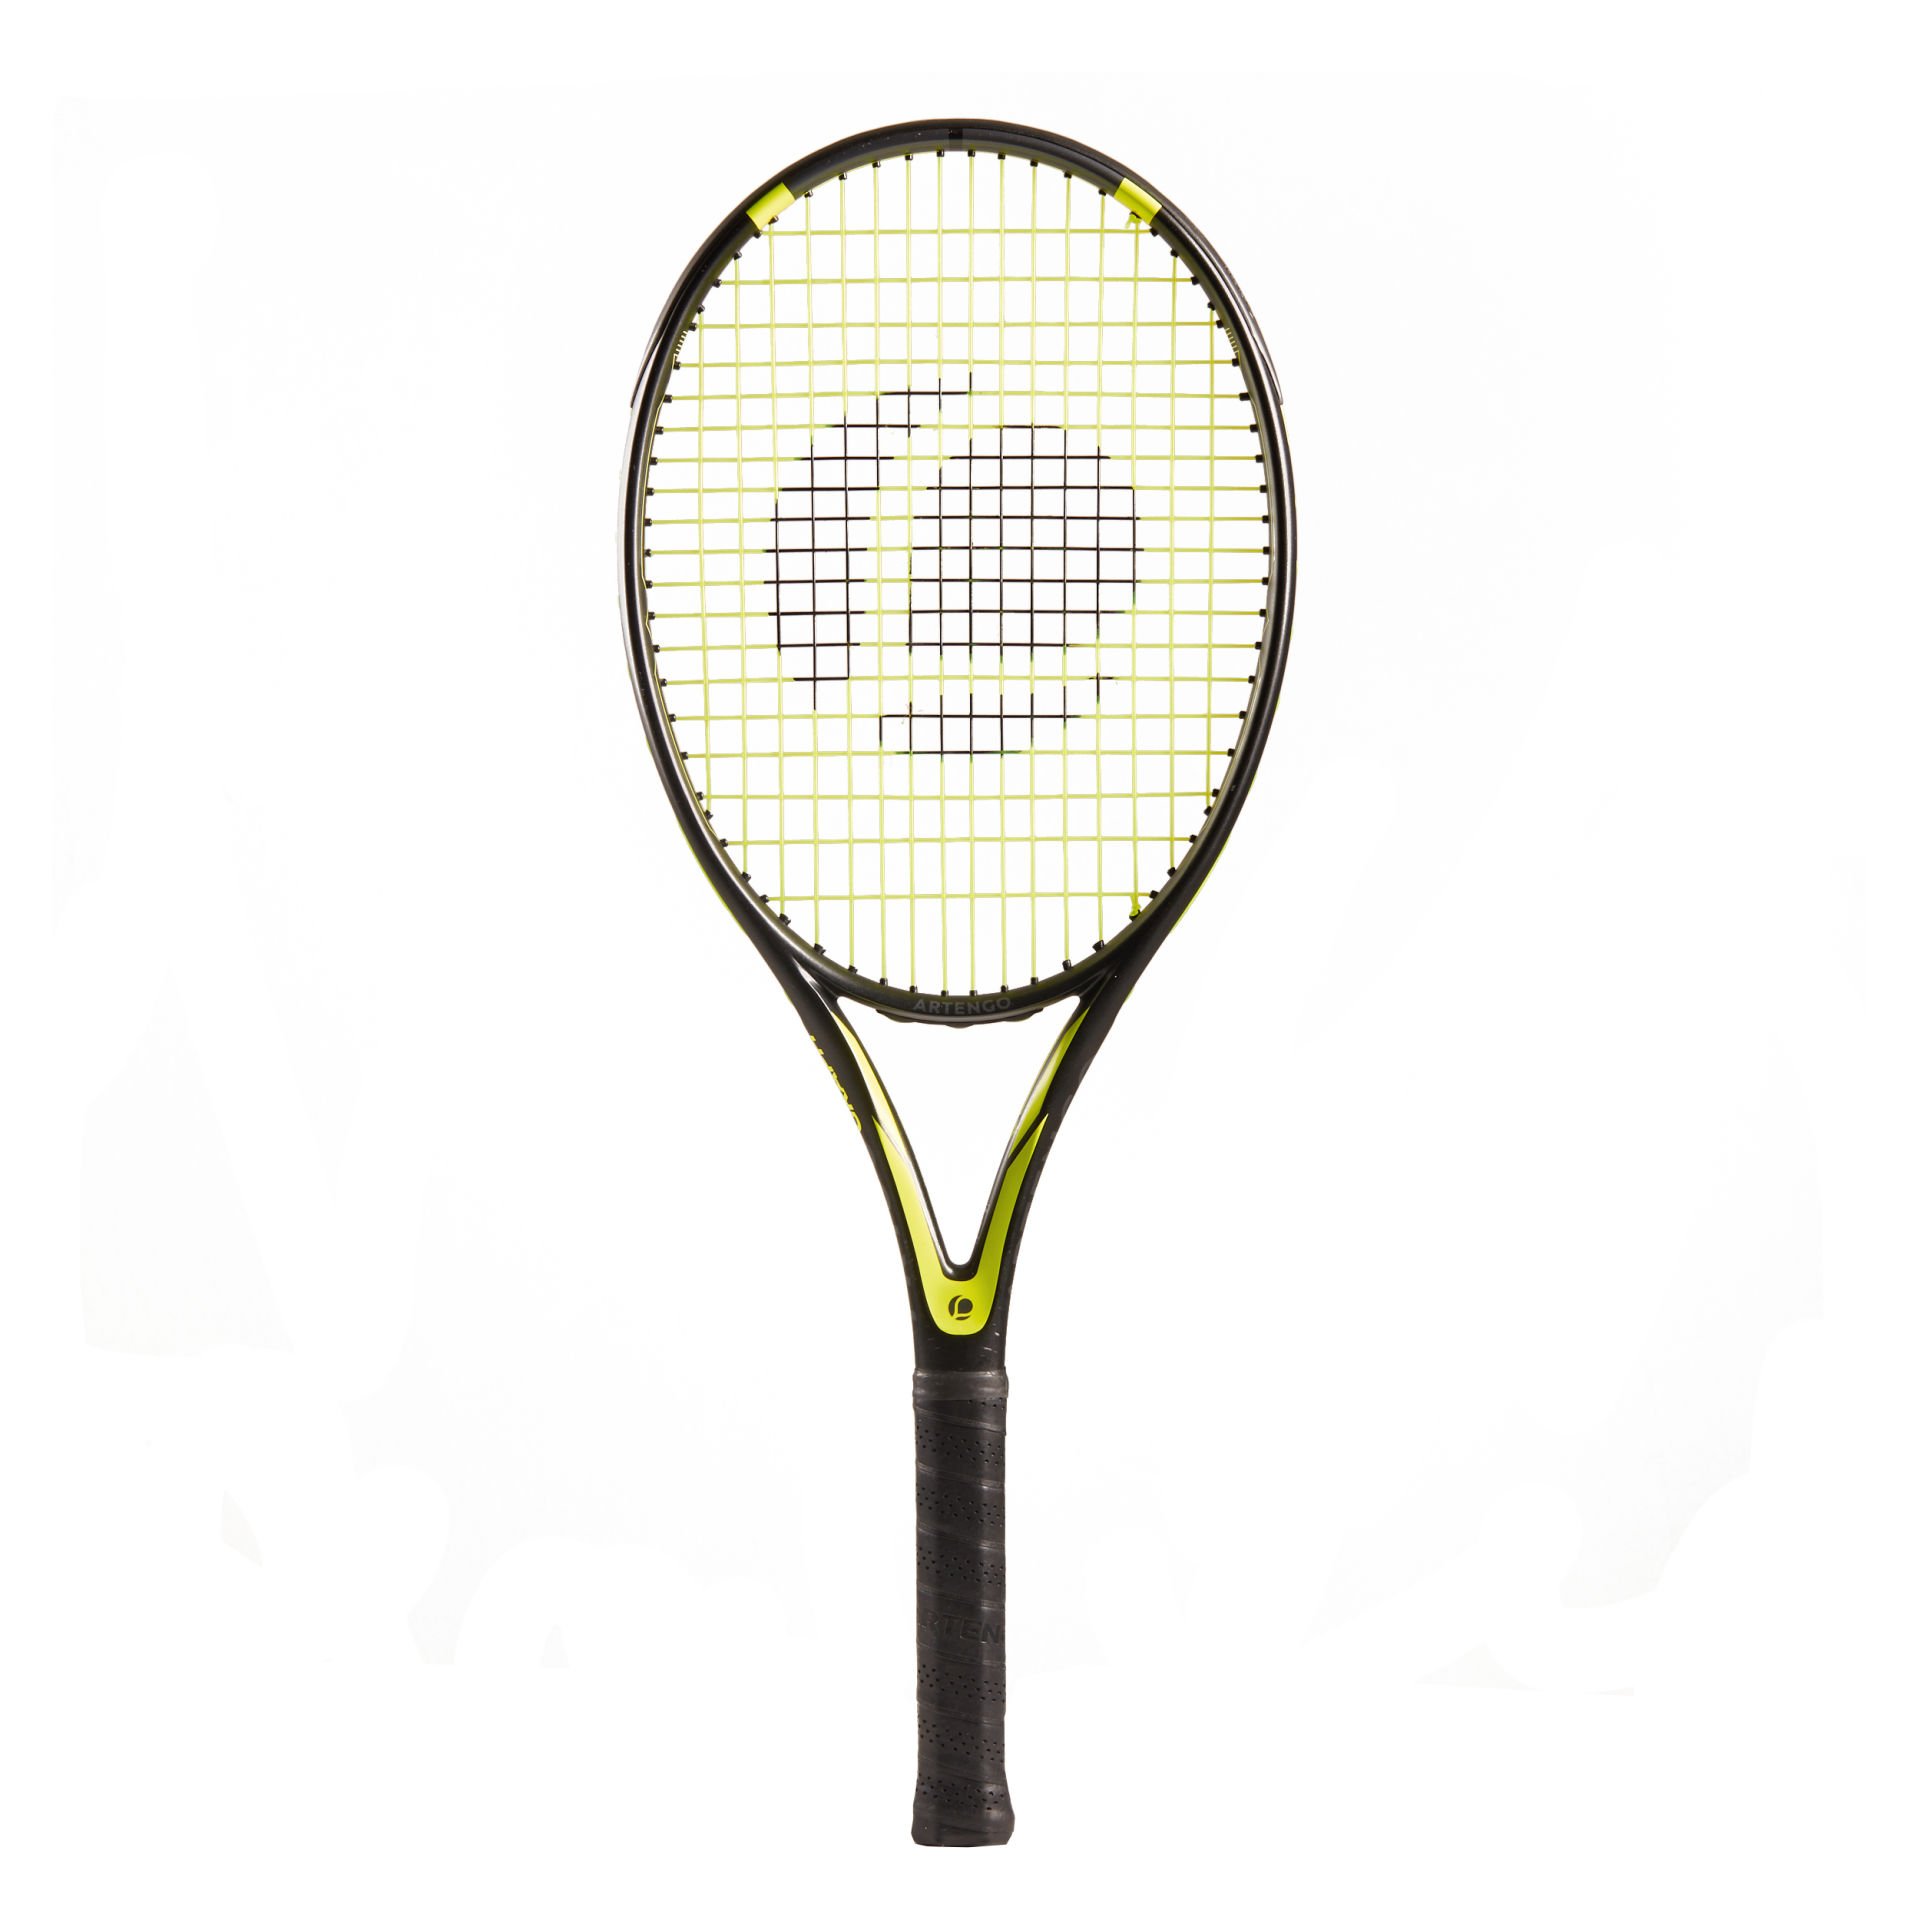 Artengo Tenis Raketi - TR160 Graph - Siyah - 270 gr.